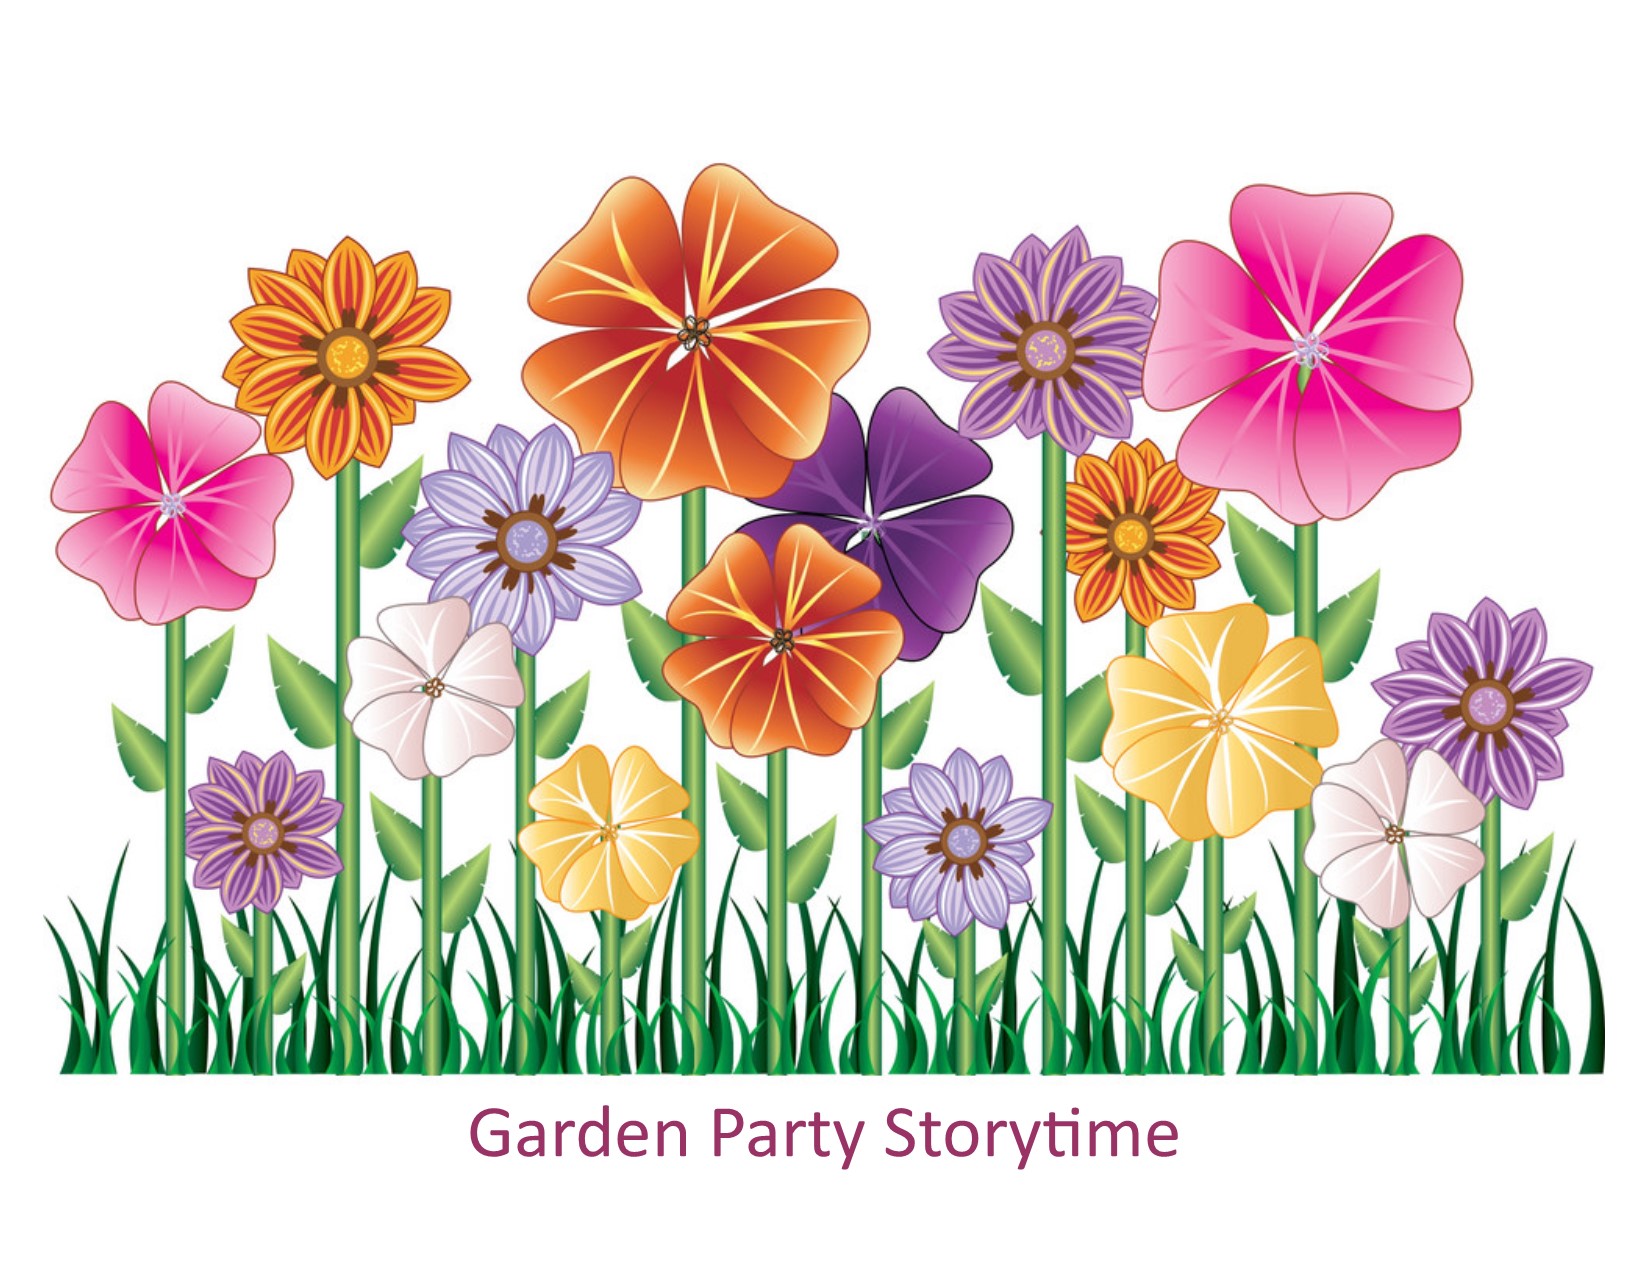 Garden Party Storytime